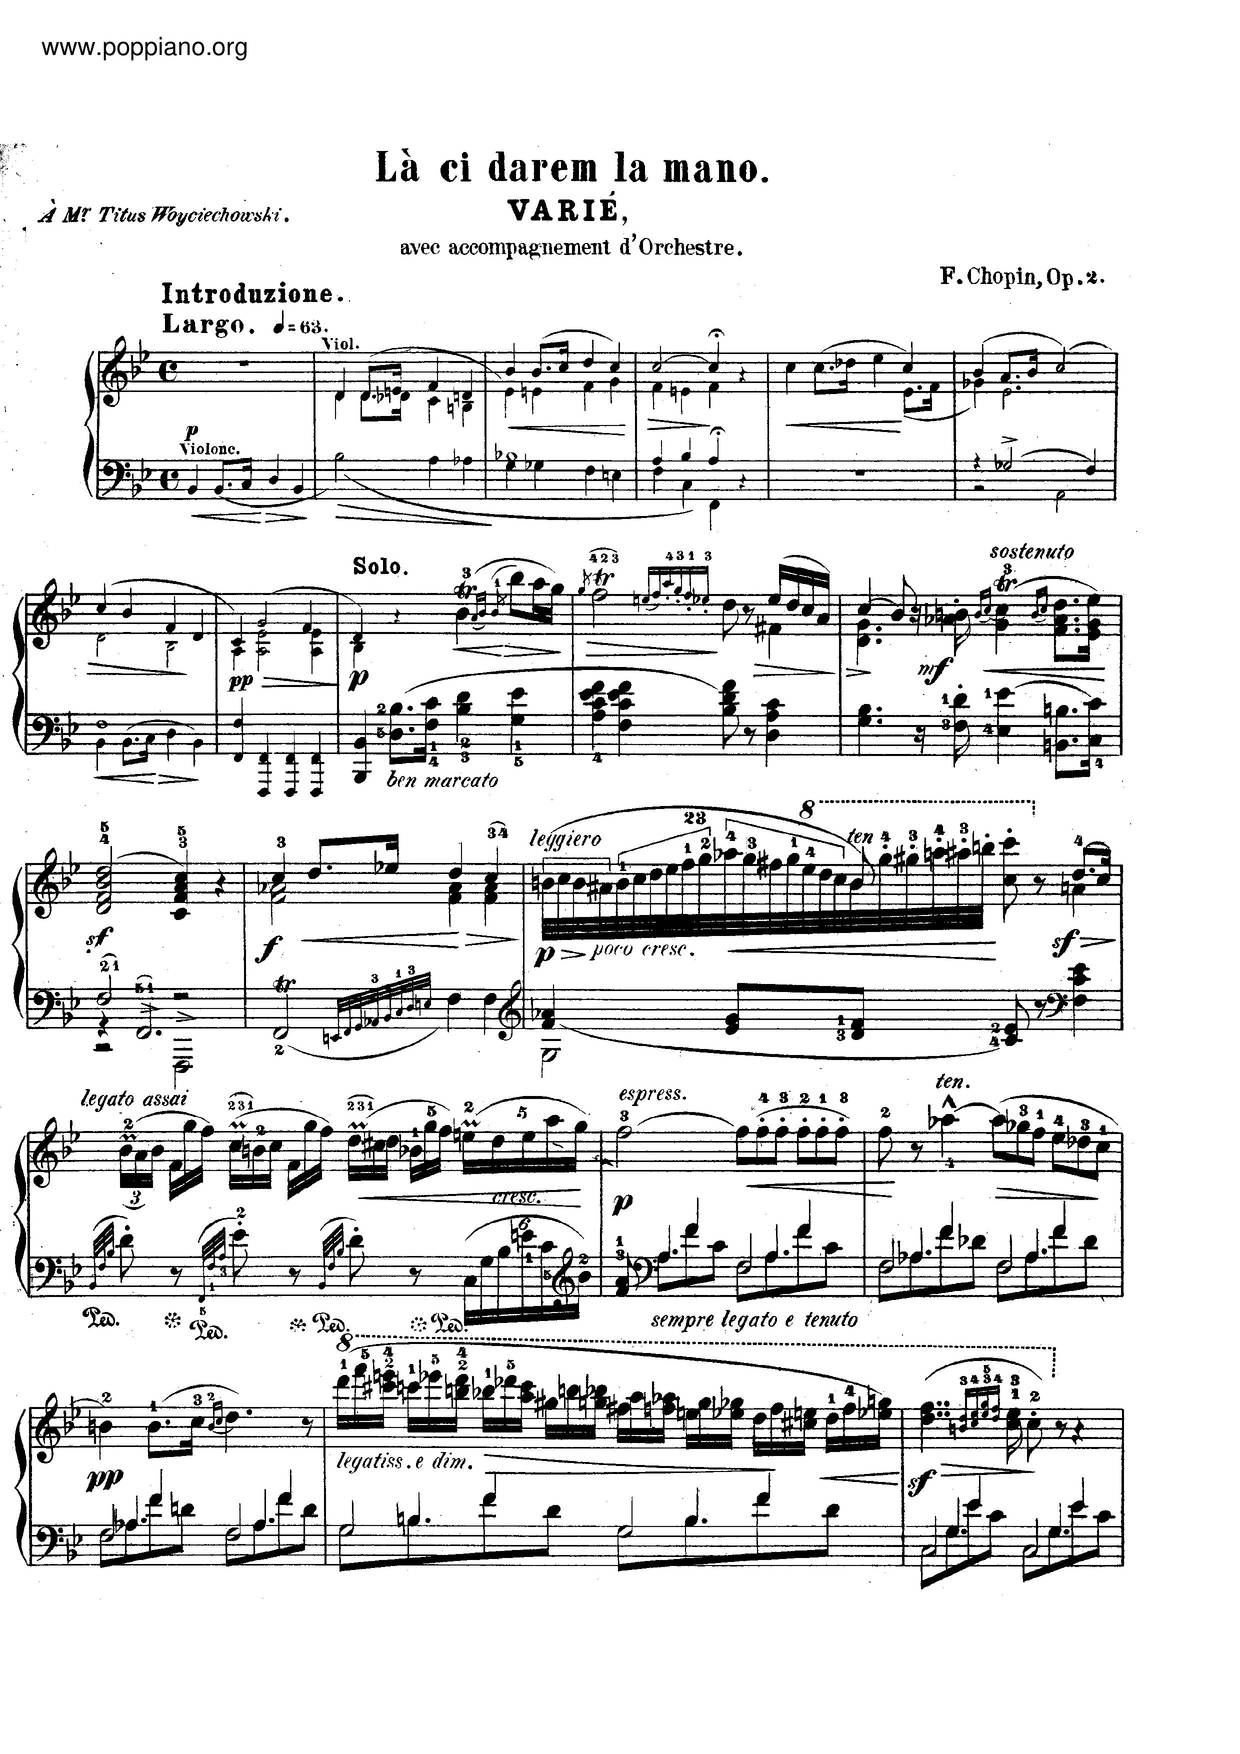 Variations On 'La Ci Darem La Mano', Op. 2 Score